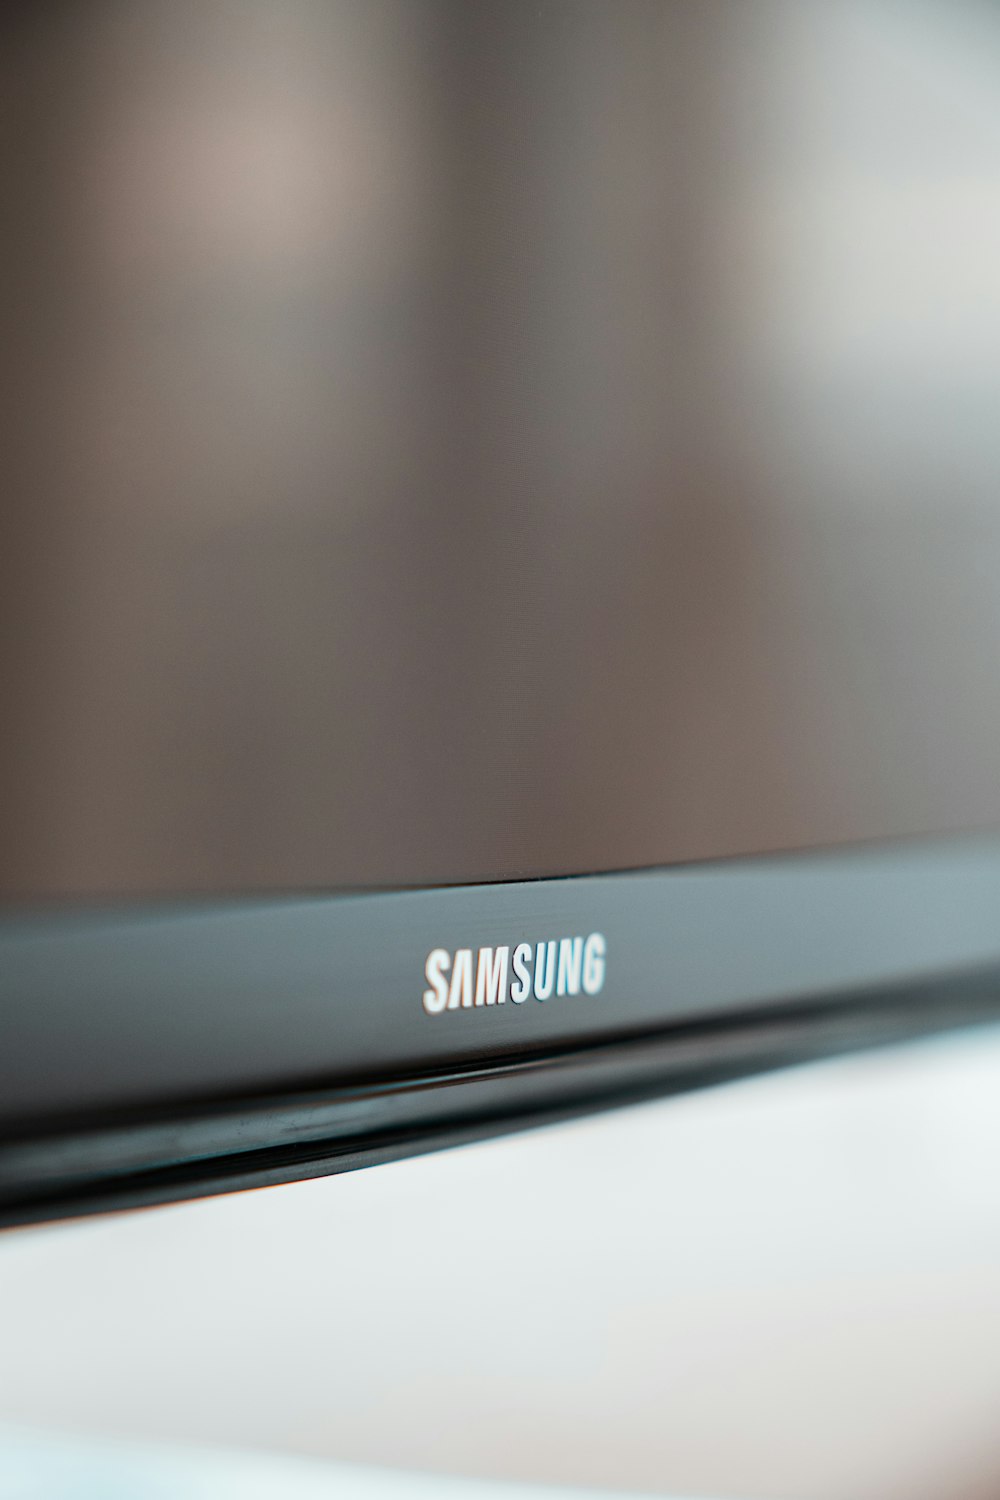 shallow focus photo of black Samsung flat screen TV